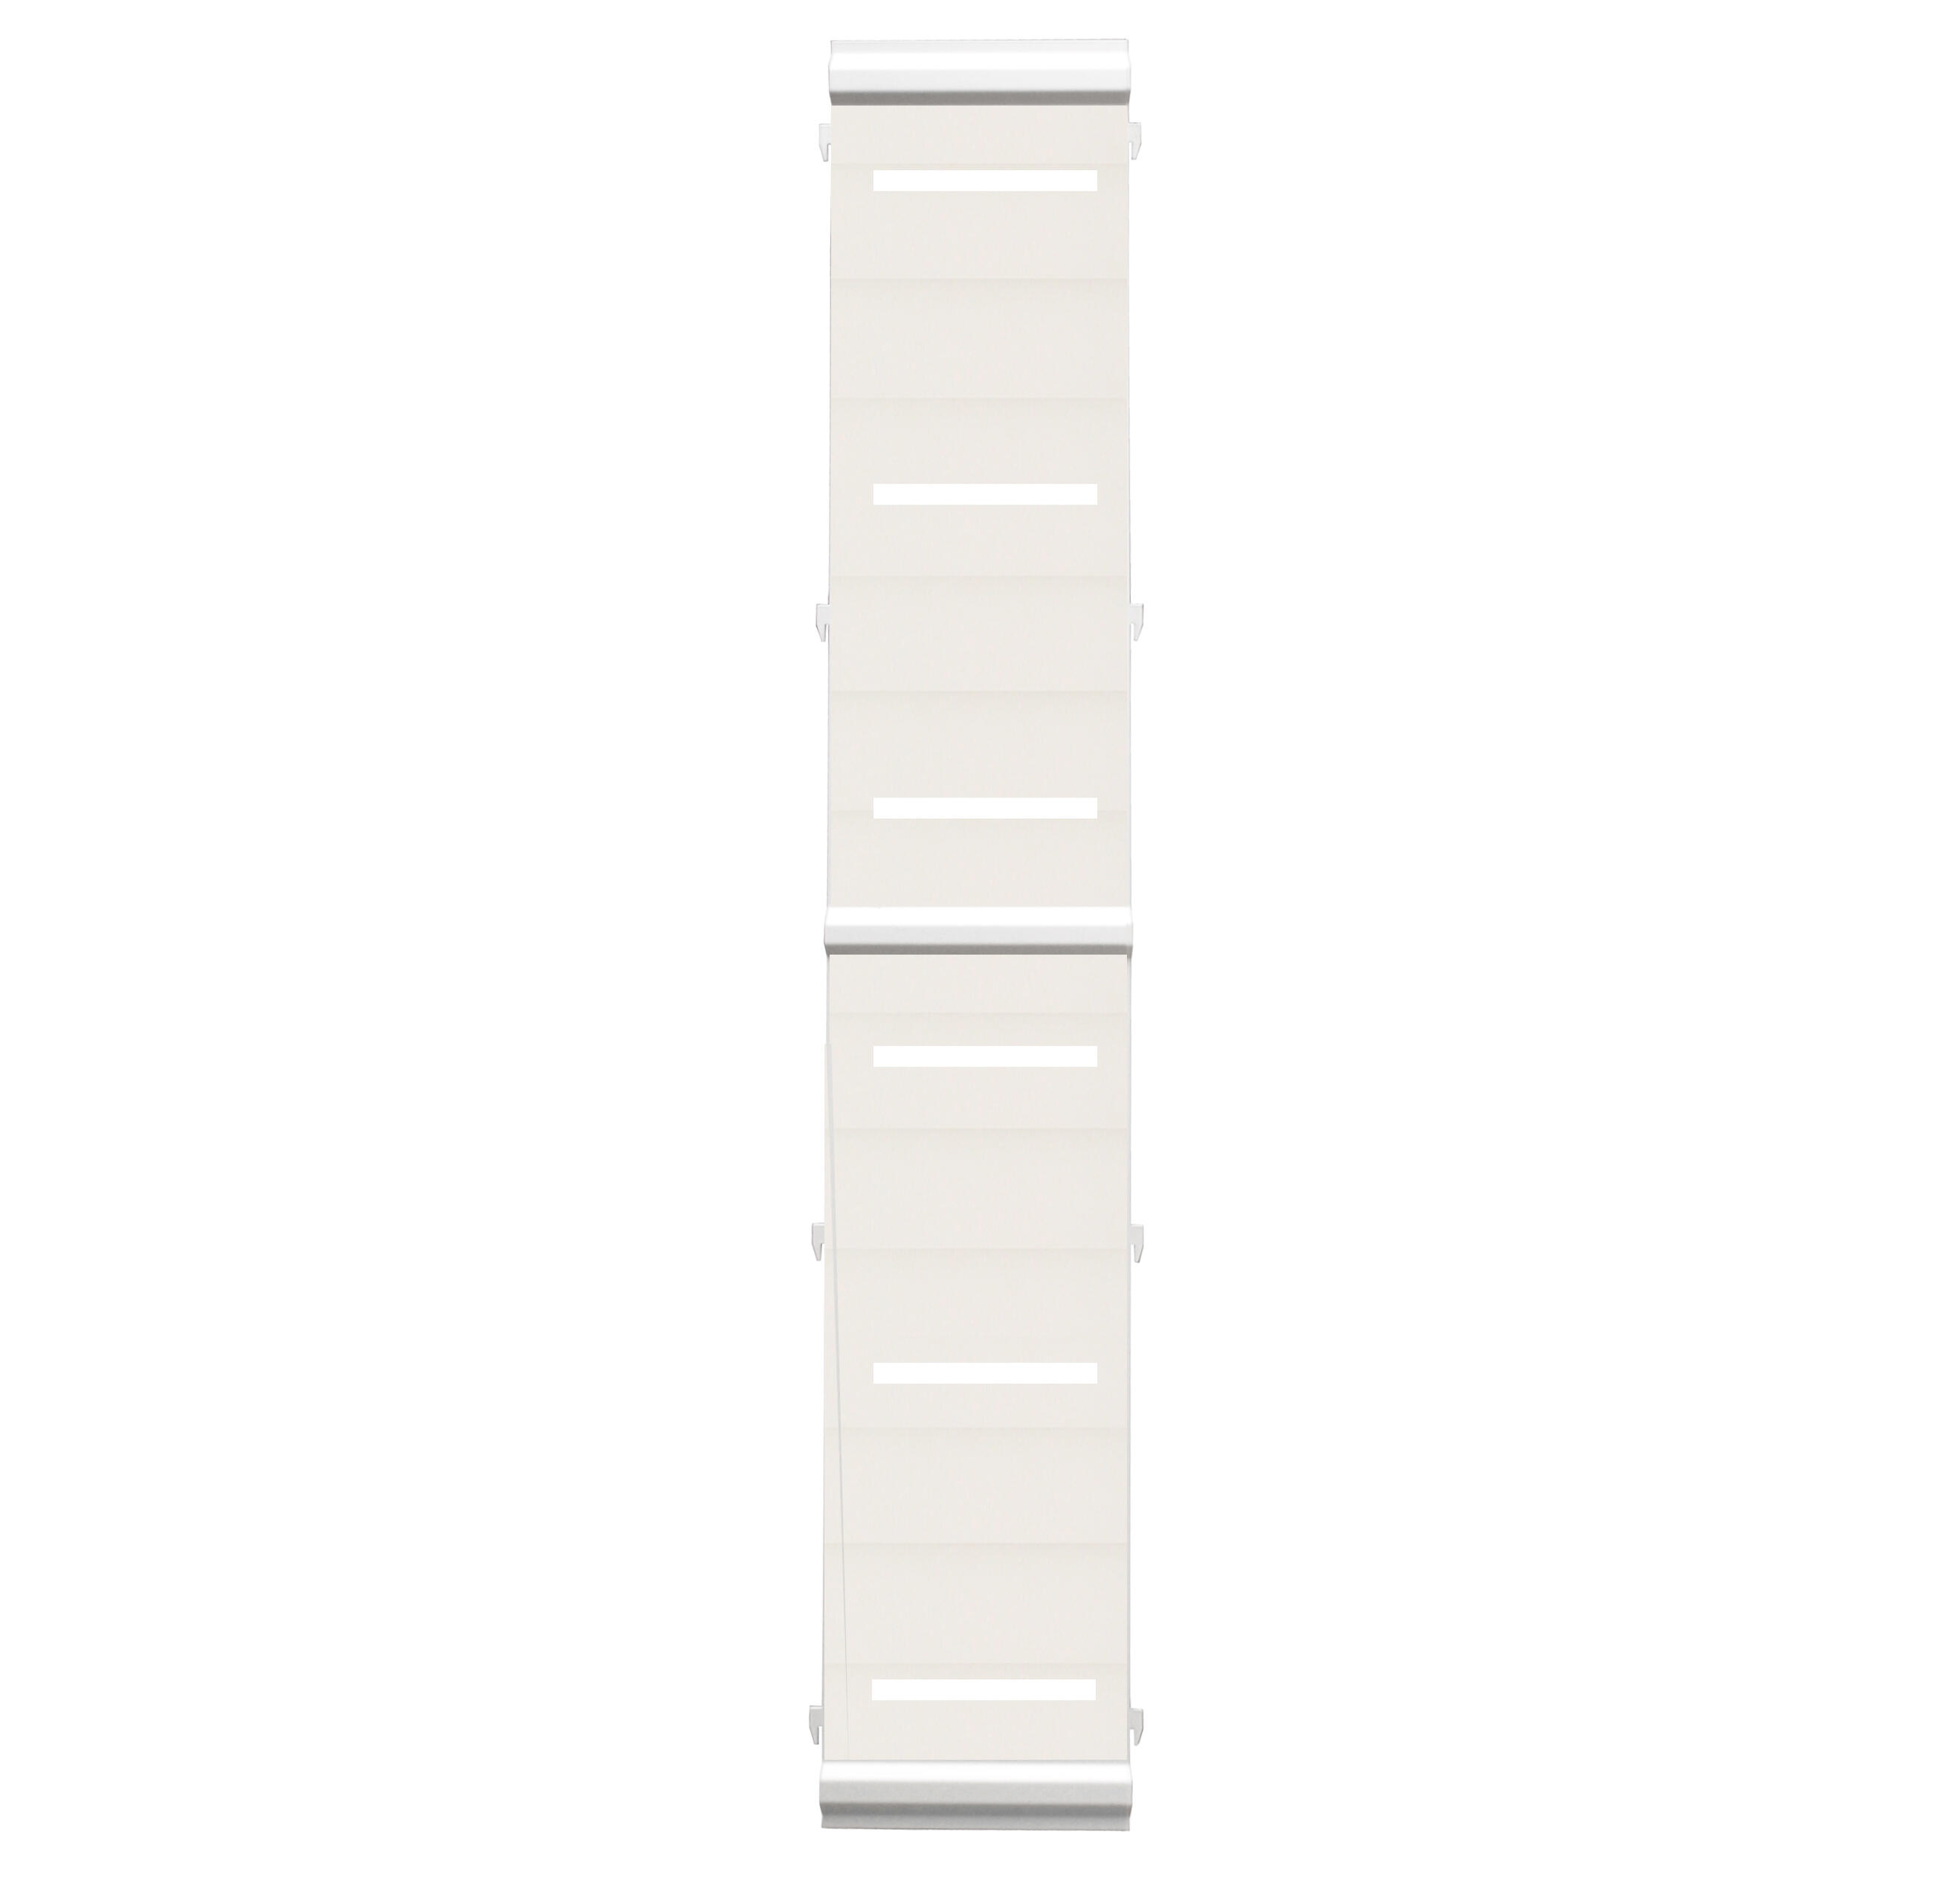 Panel remate valla acero galvanizado franja rayas blanco 144x24,5 cm